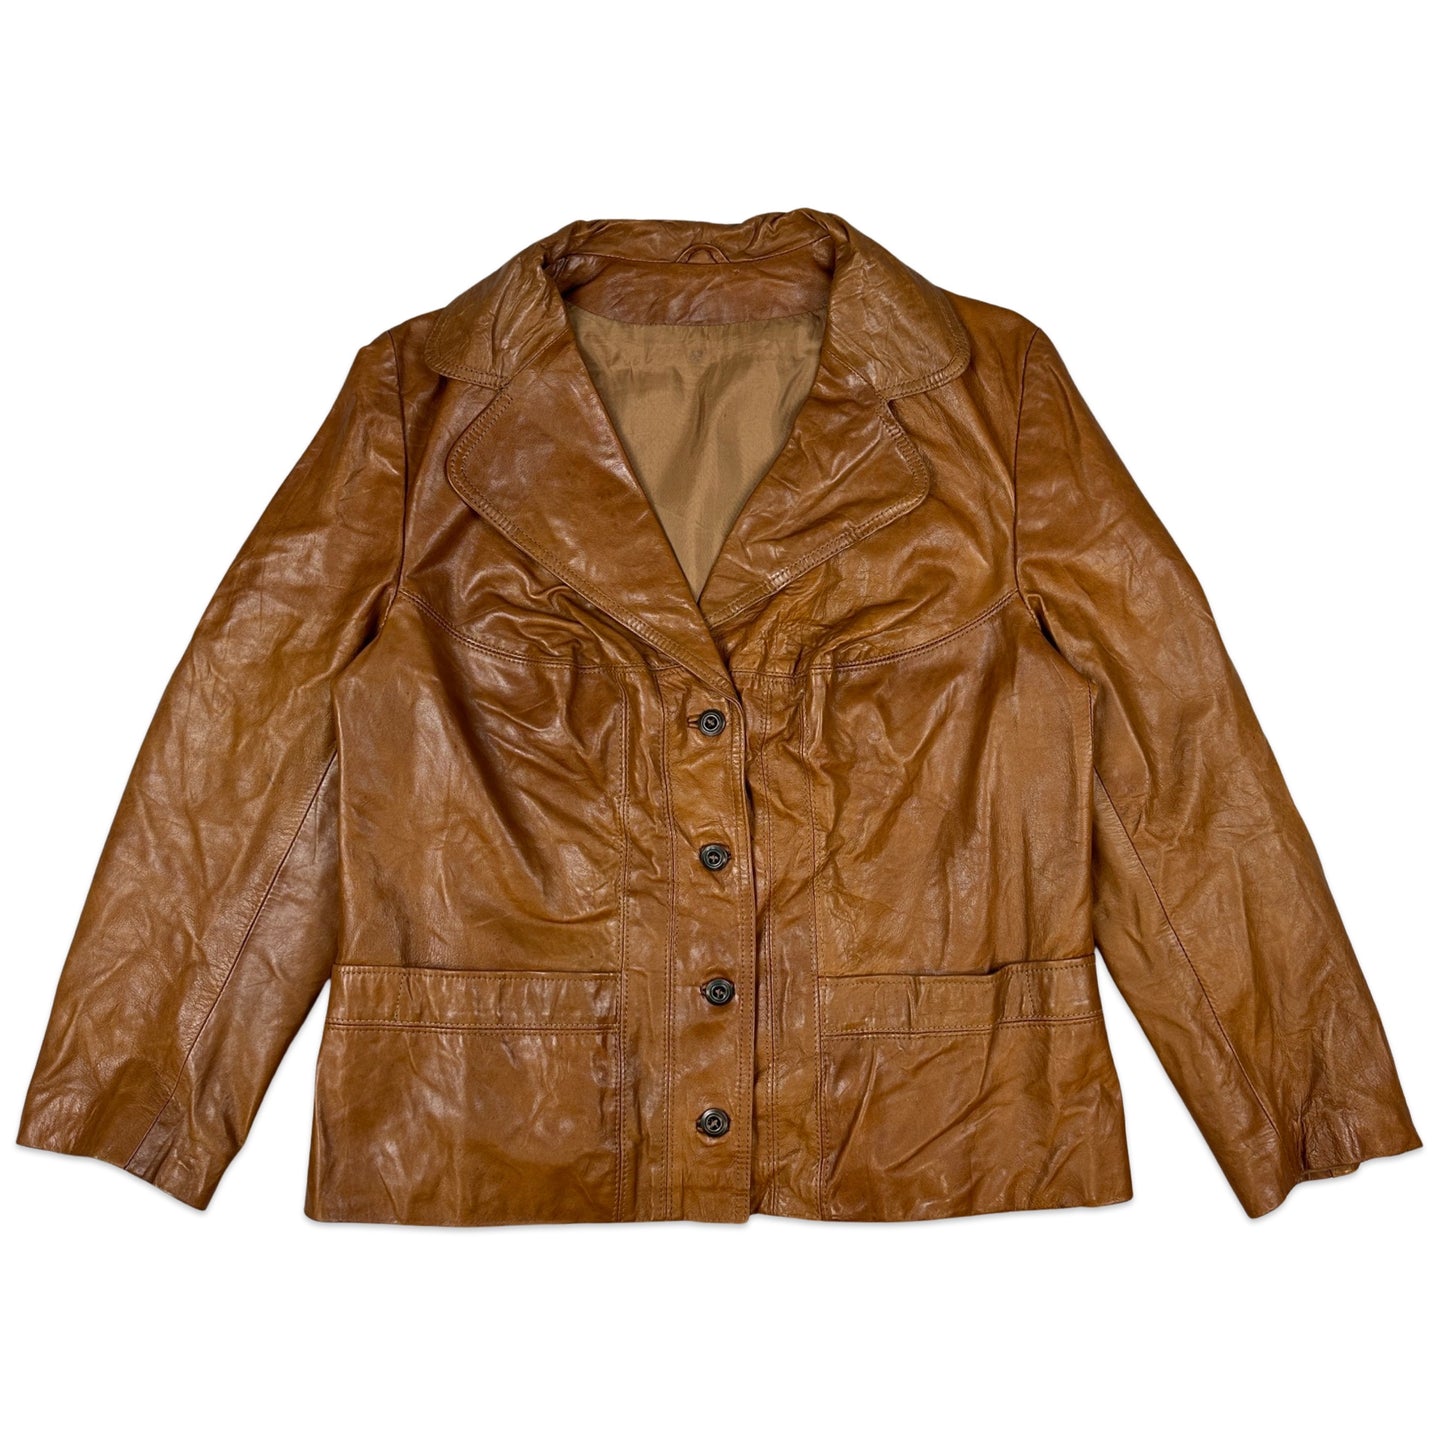 90s Vintage Tan Leather Jacket 20